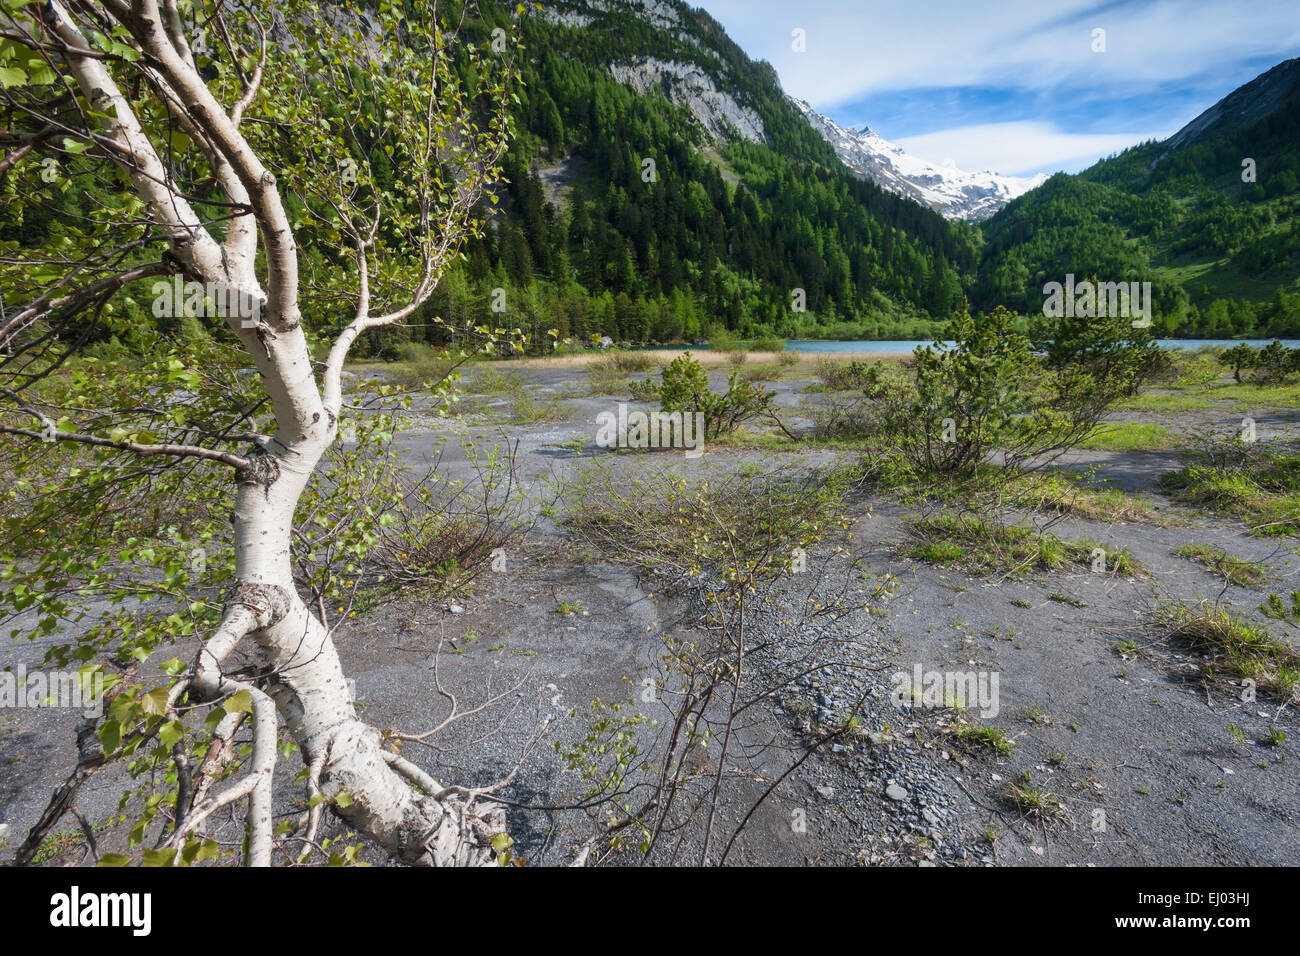 Primeval forest, forest, Derborence, Switzerland, Europe, canton, Valais, mountain lake, lake, tree, birch Stock Photo